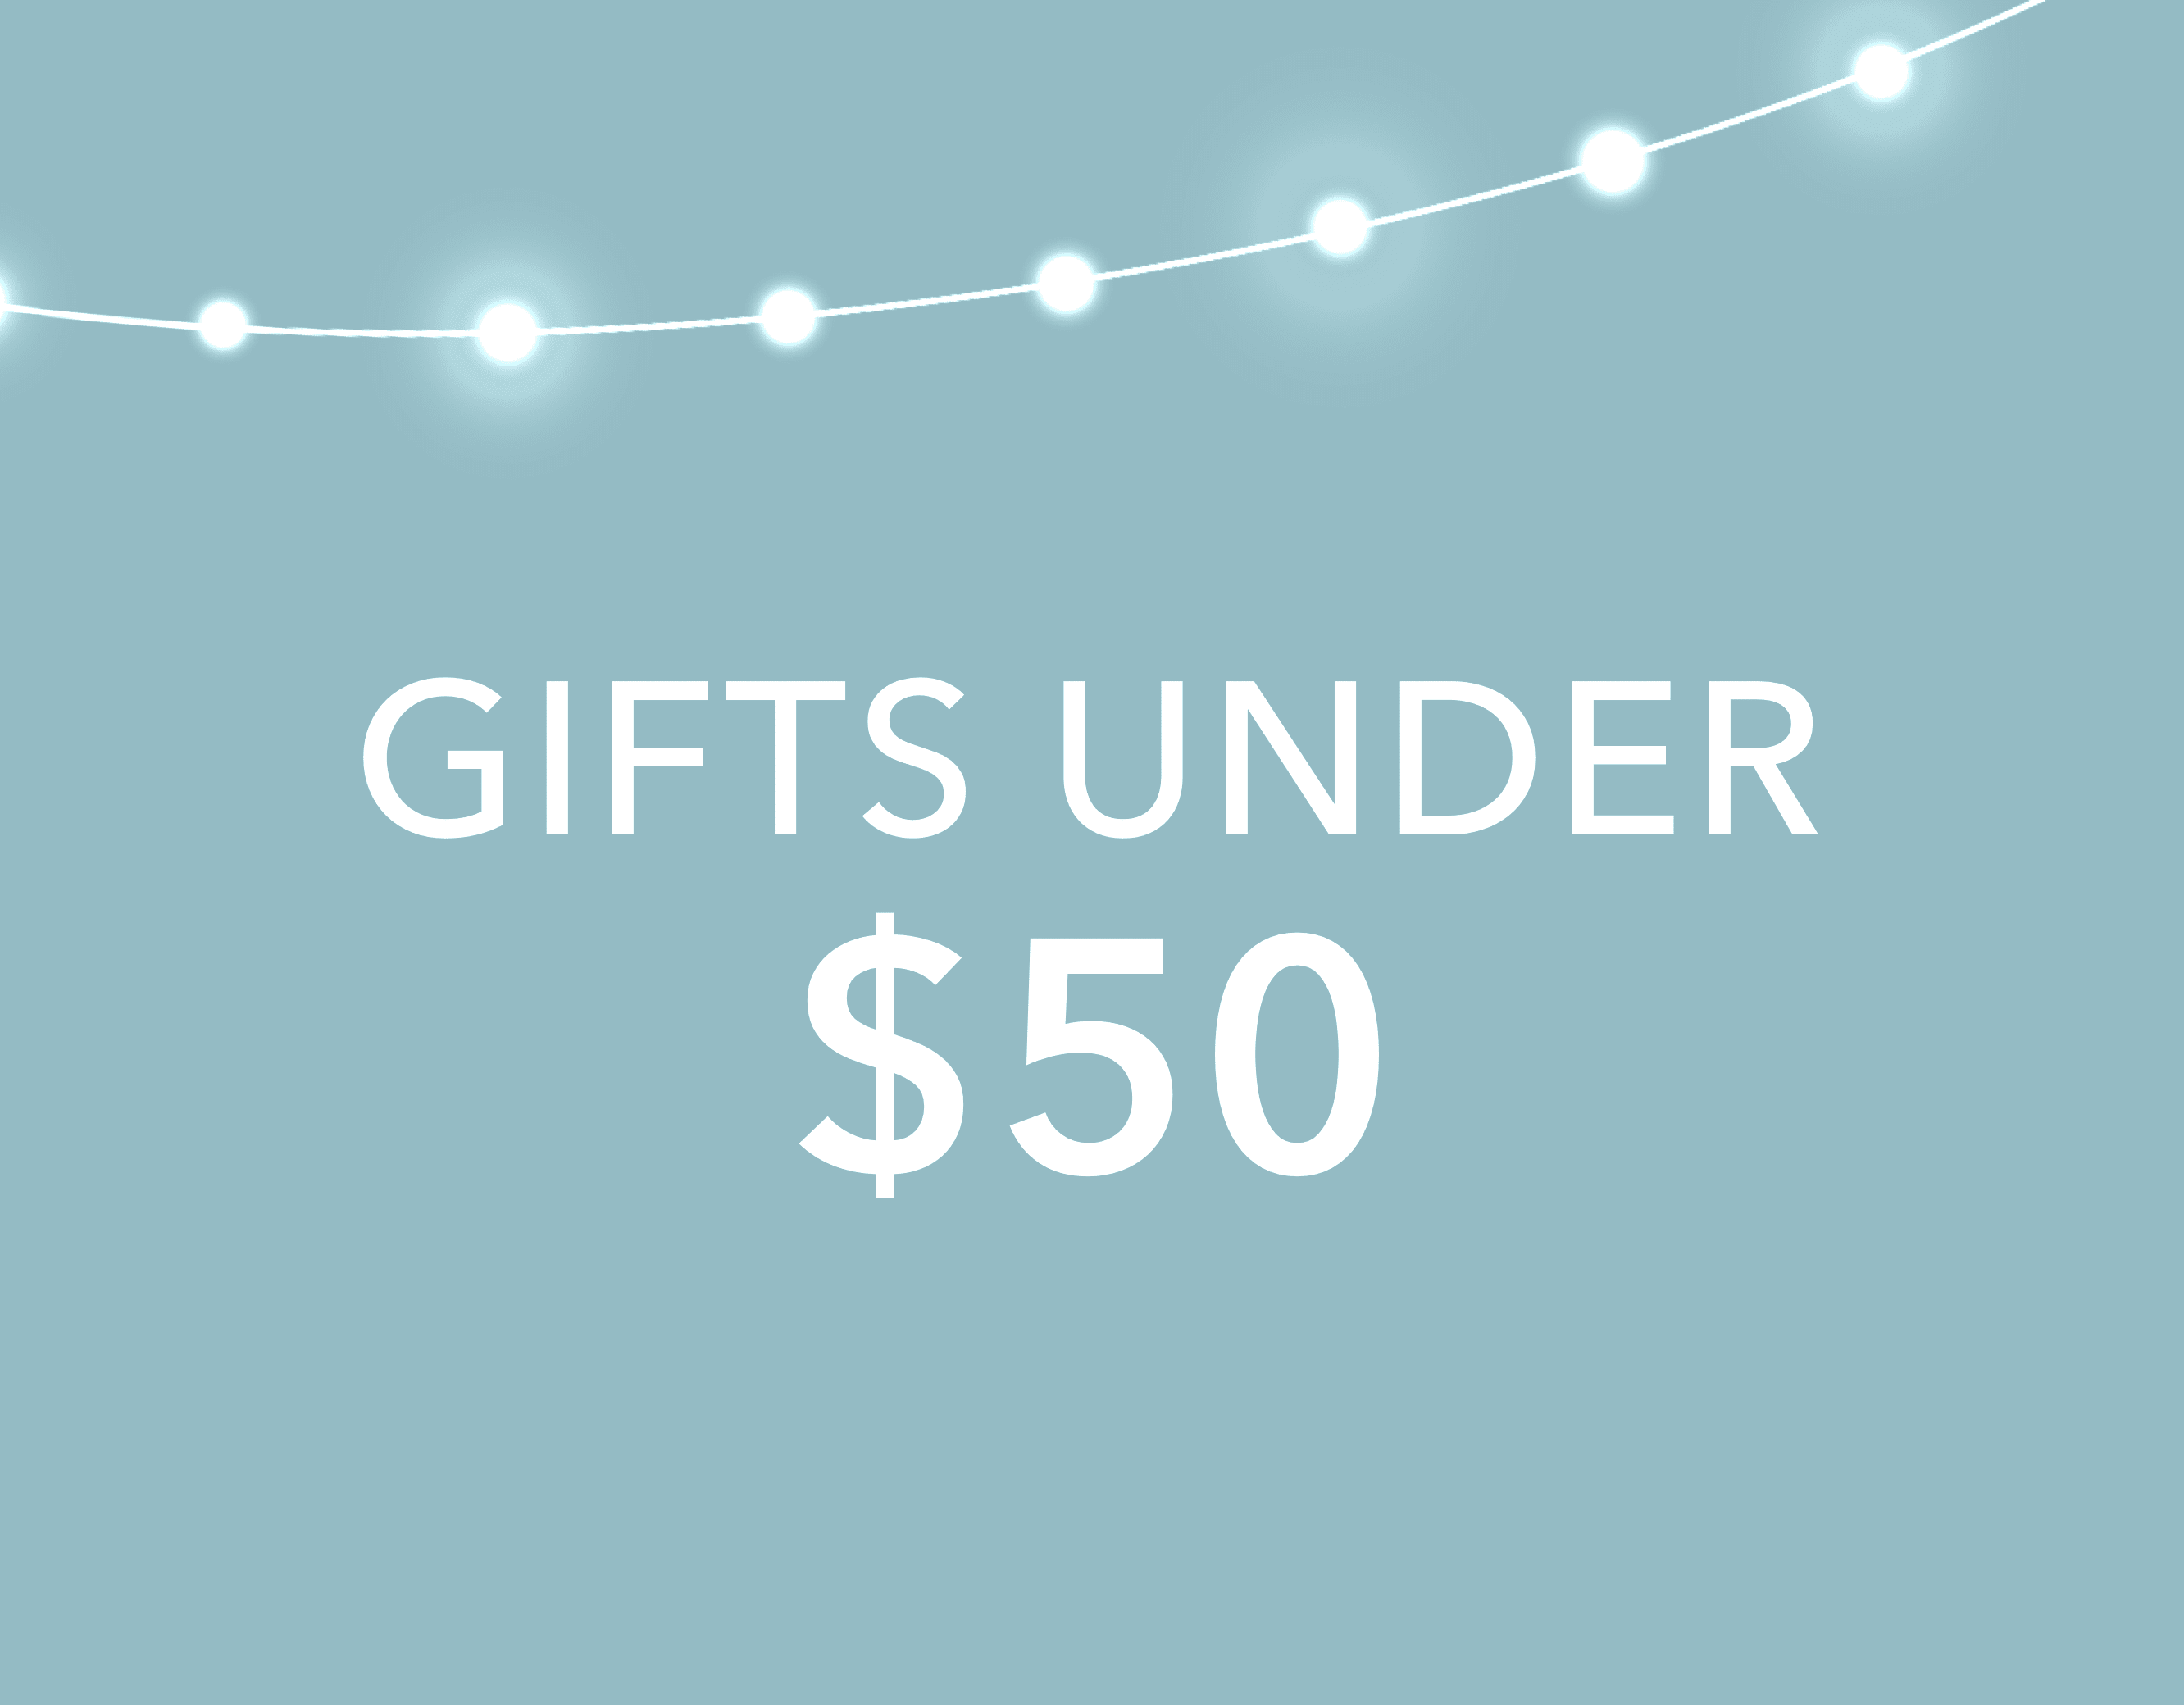 Gifts under $50 